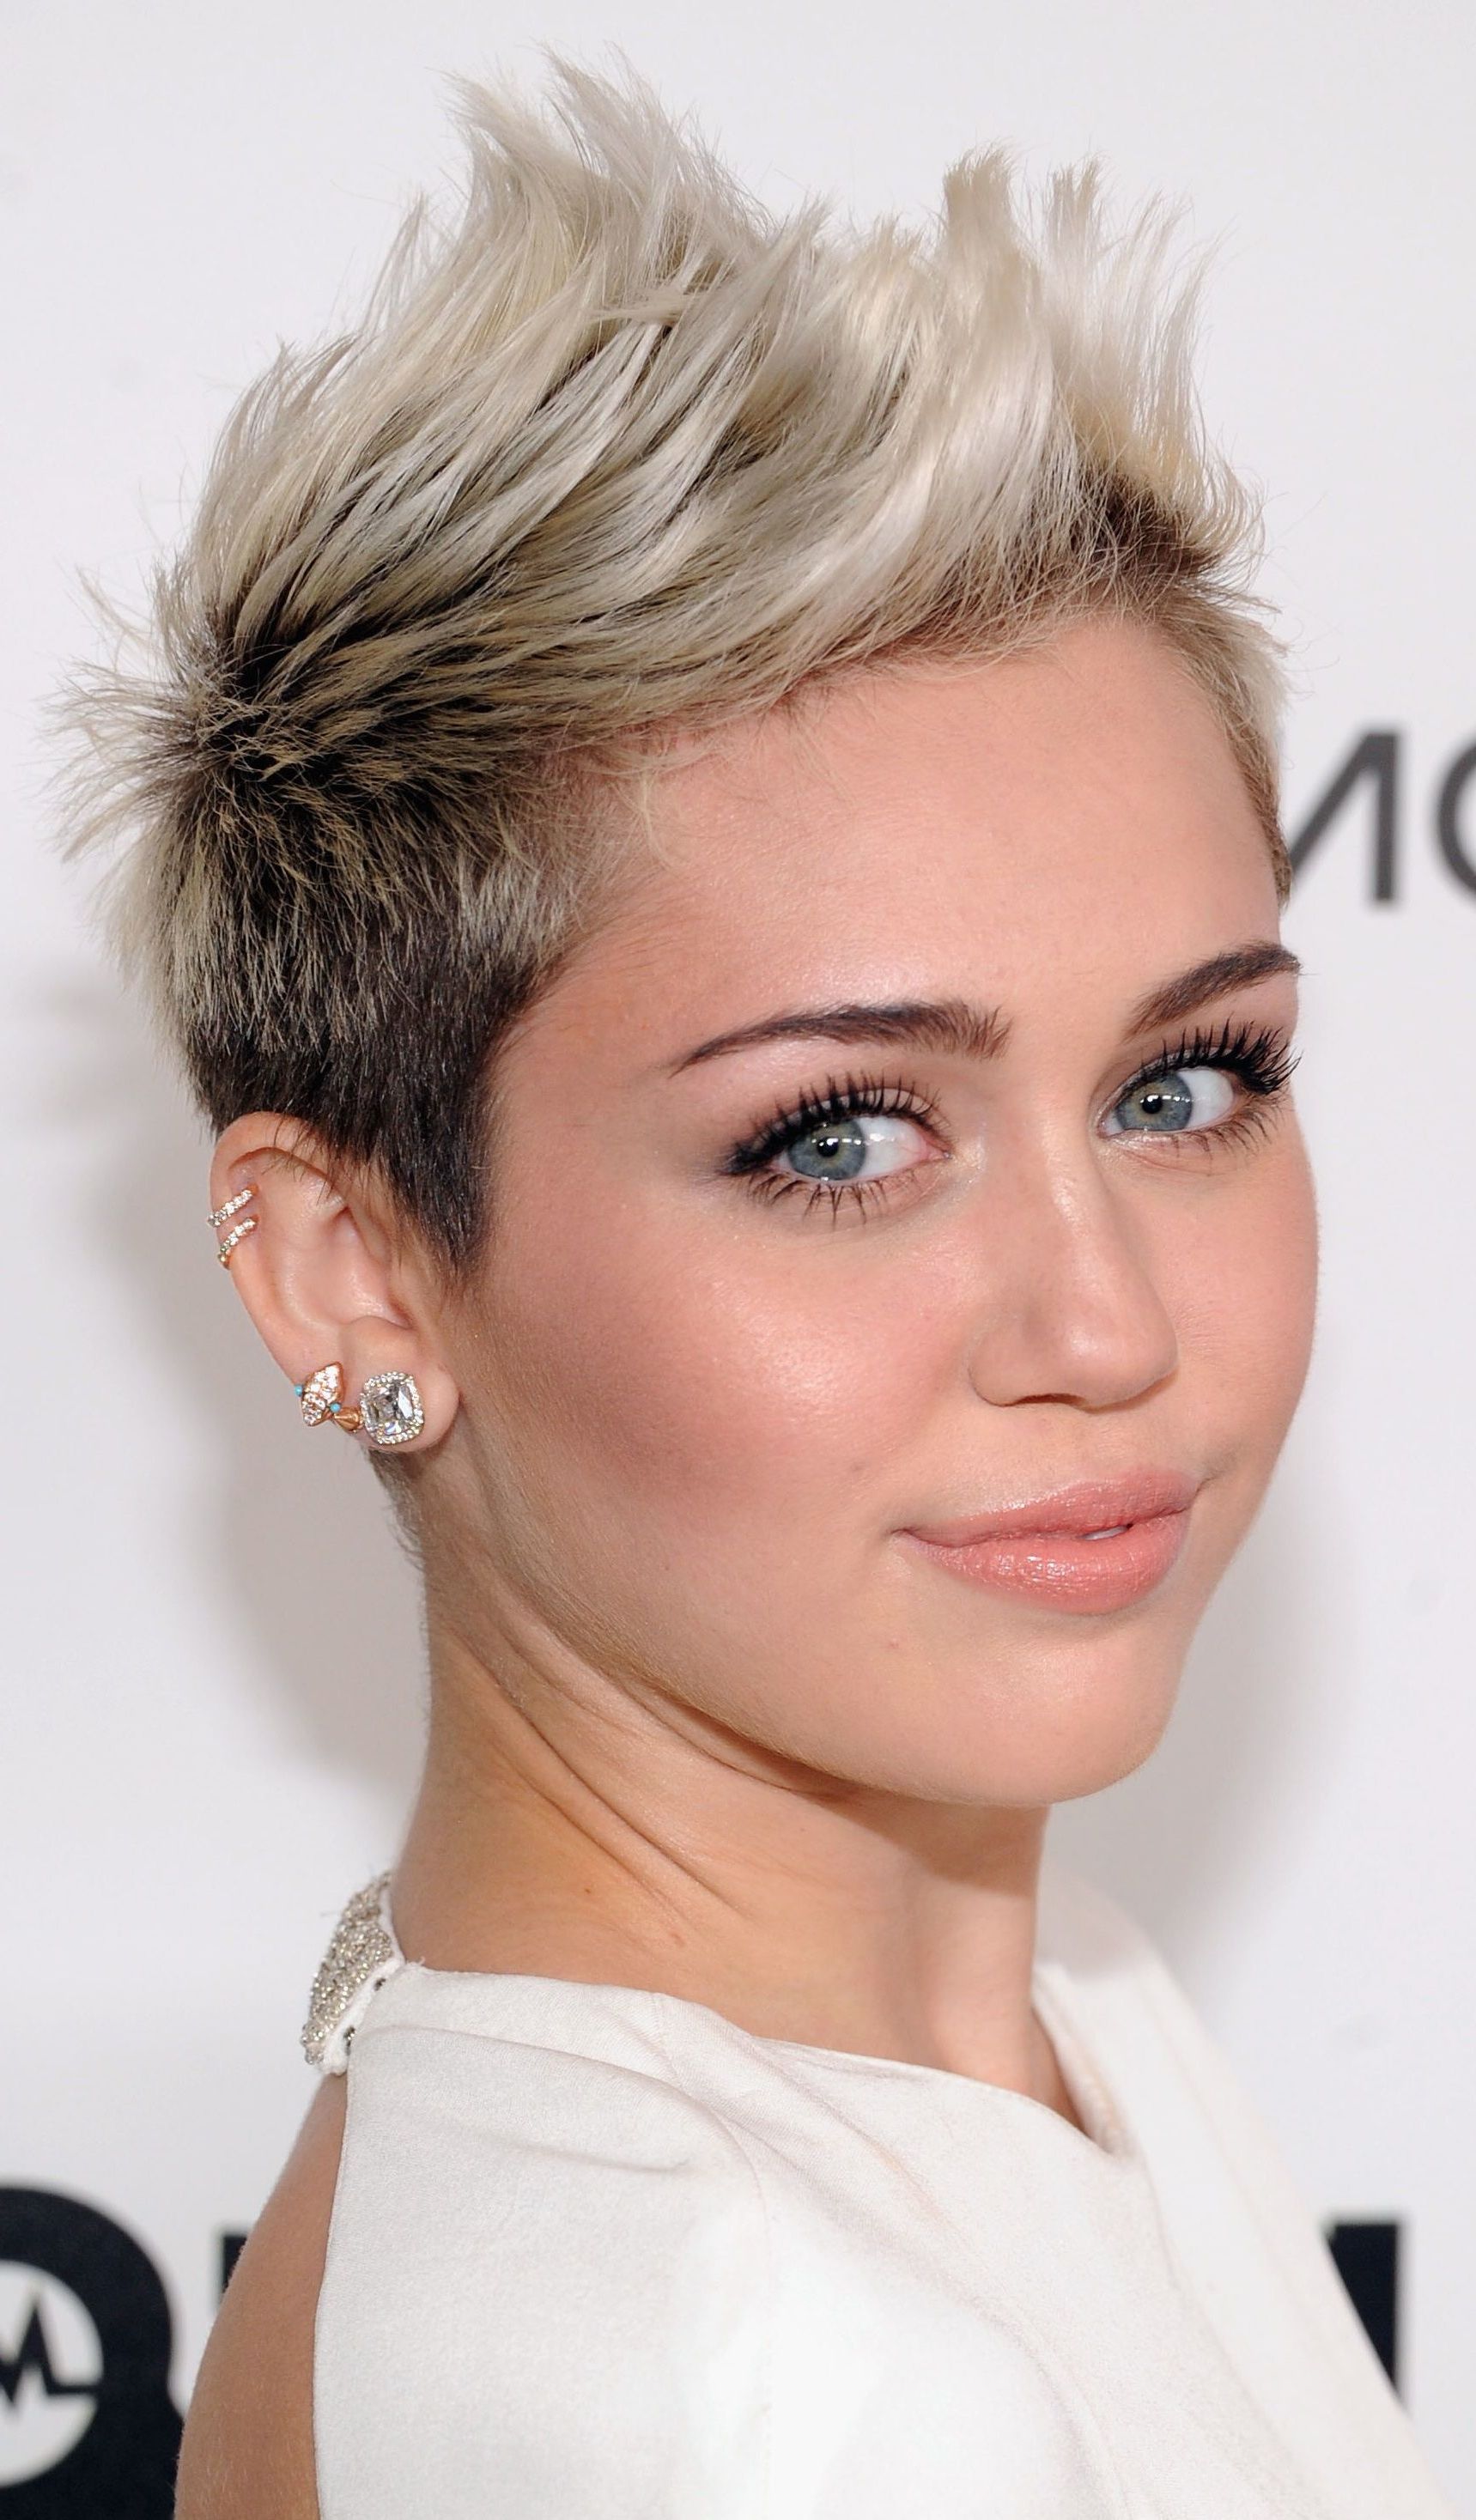 Miley Cyrus: Platinum Blonde Ombre Short Hairstyle In 2018 | Hair Within Miley Cyrus Short Hairstyles (View 7 of 25)